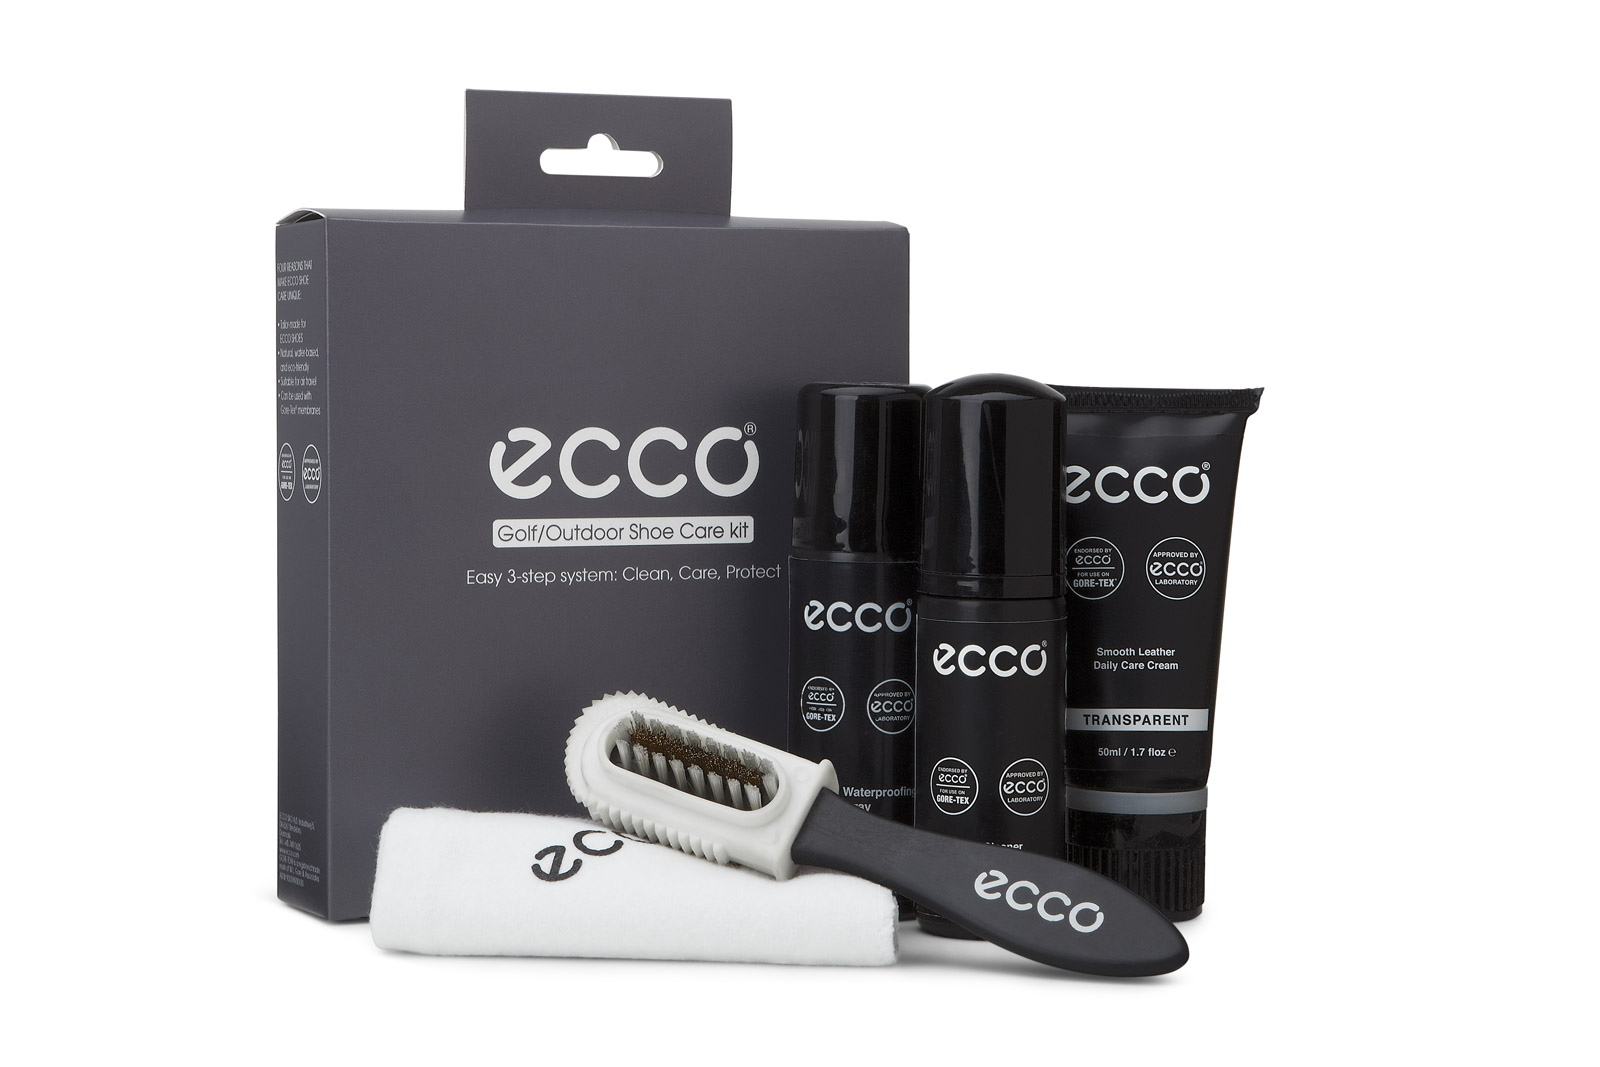 ECCO Golf shoe care, 9033996-00100 ECCO GOLF SHOECARE KIT